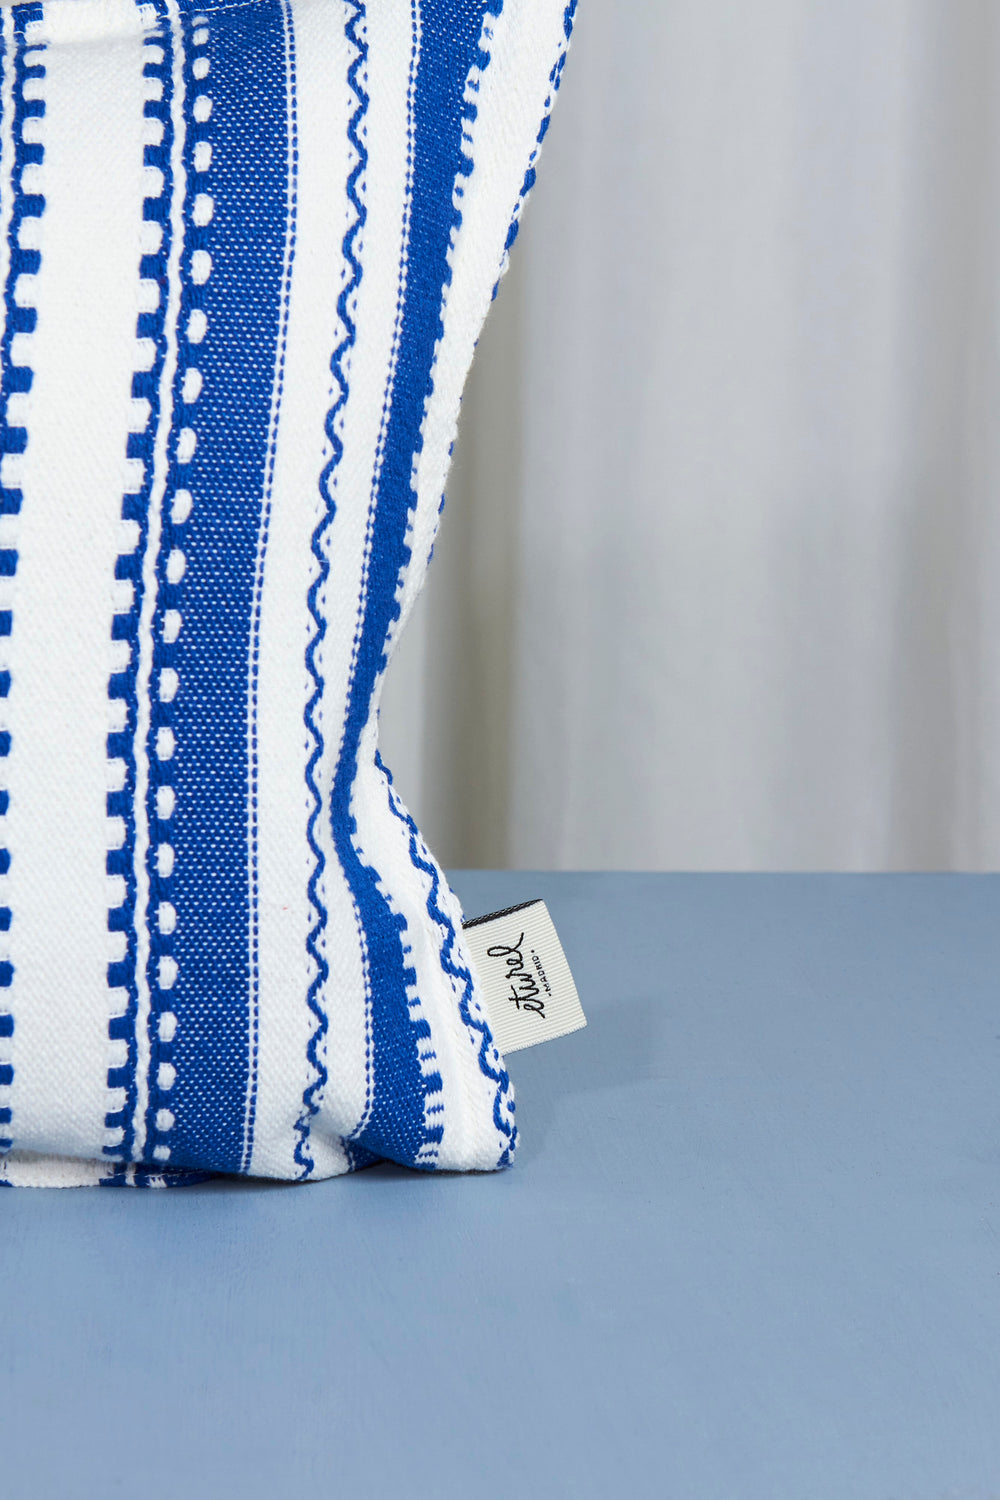 Cojín Alpujarra azul y blanca 30cmx50cm etiqueta